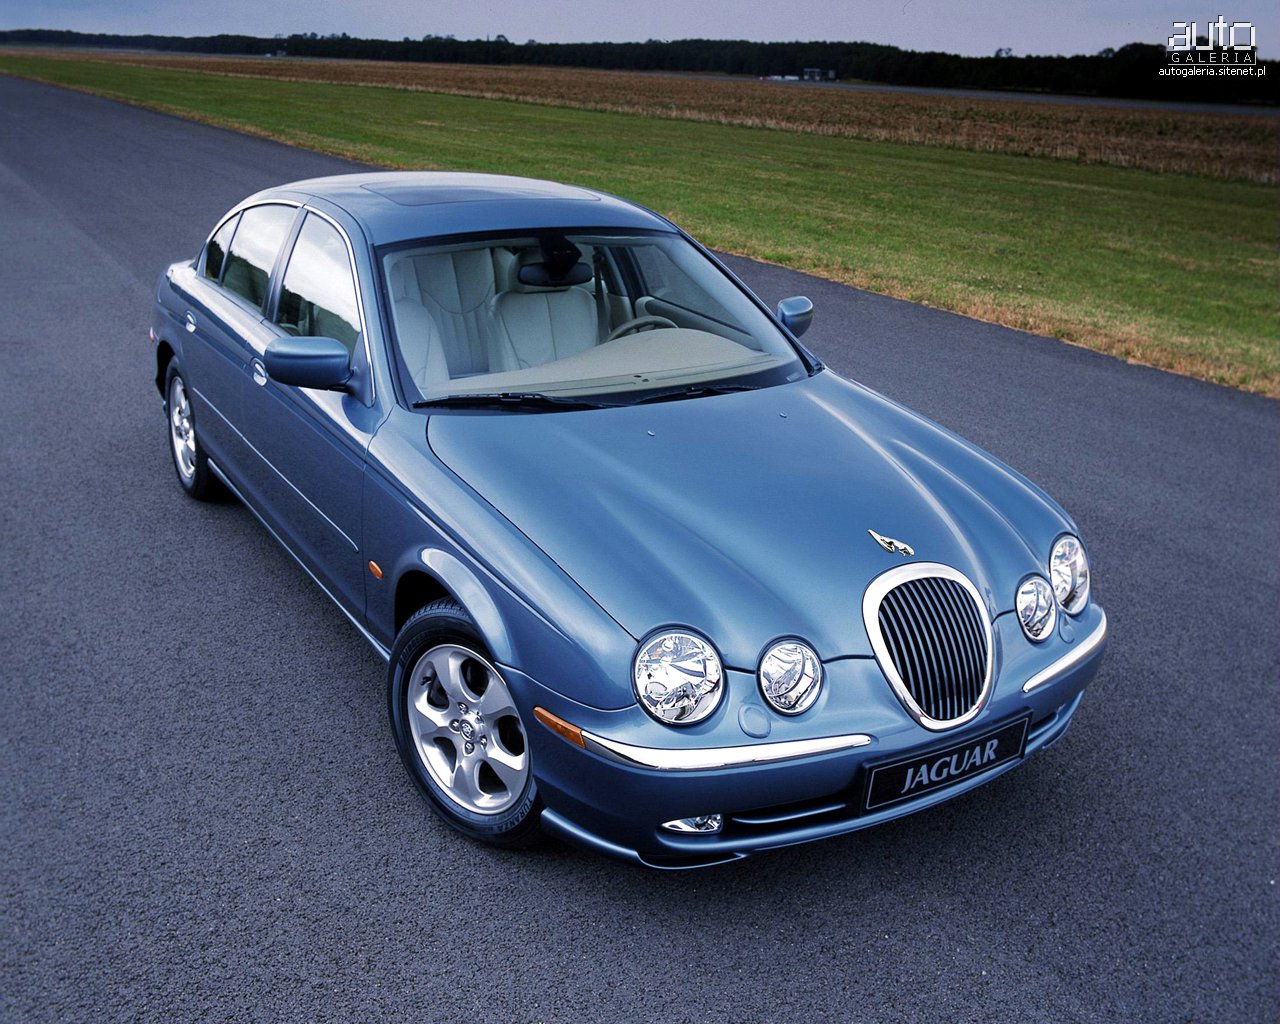 Jaguar [1994]